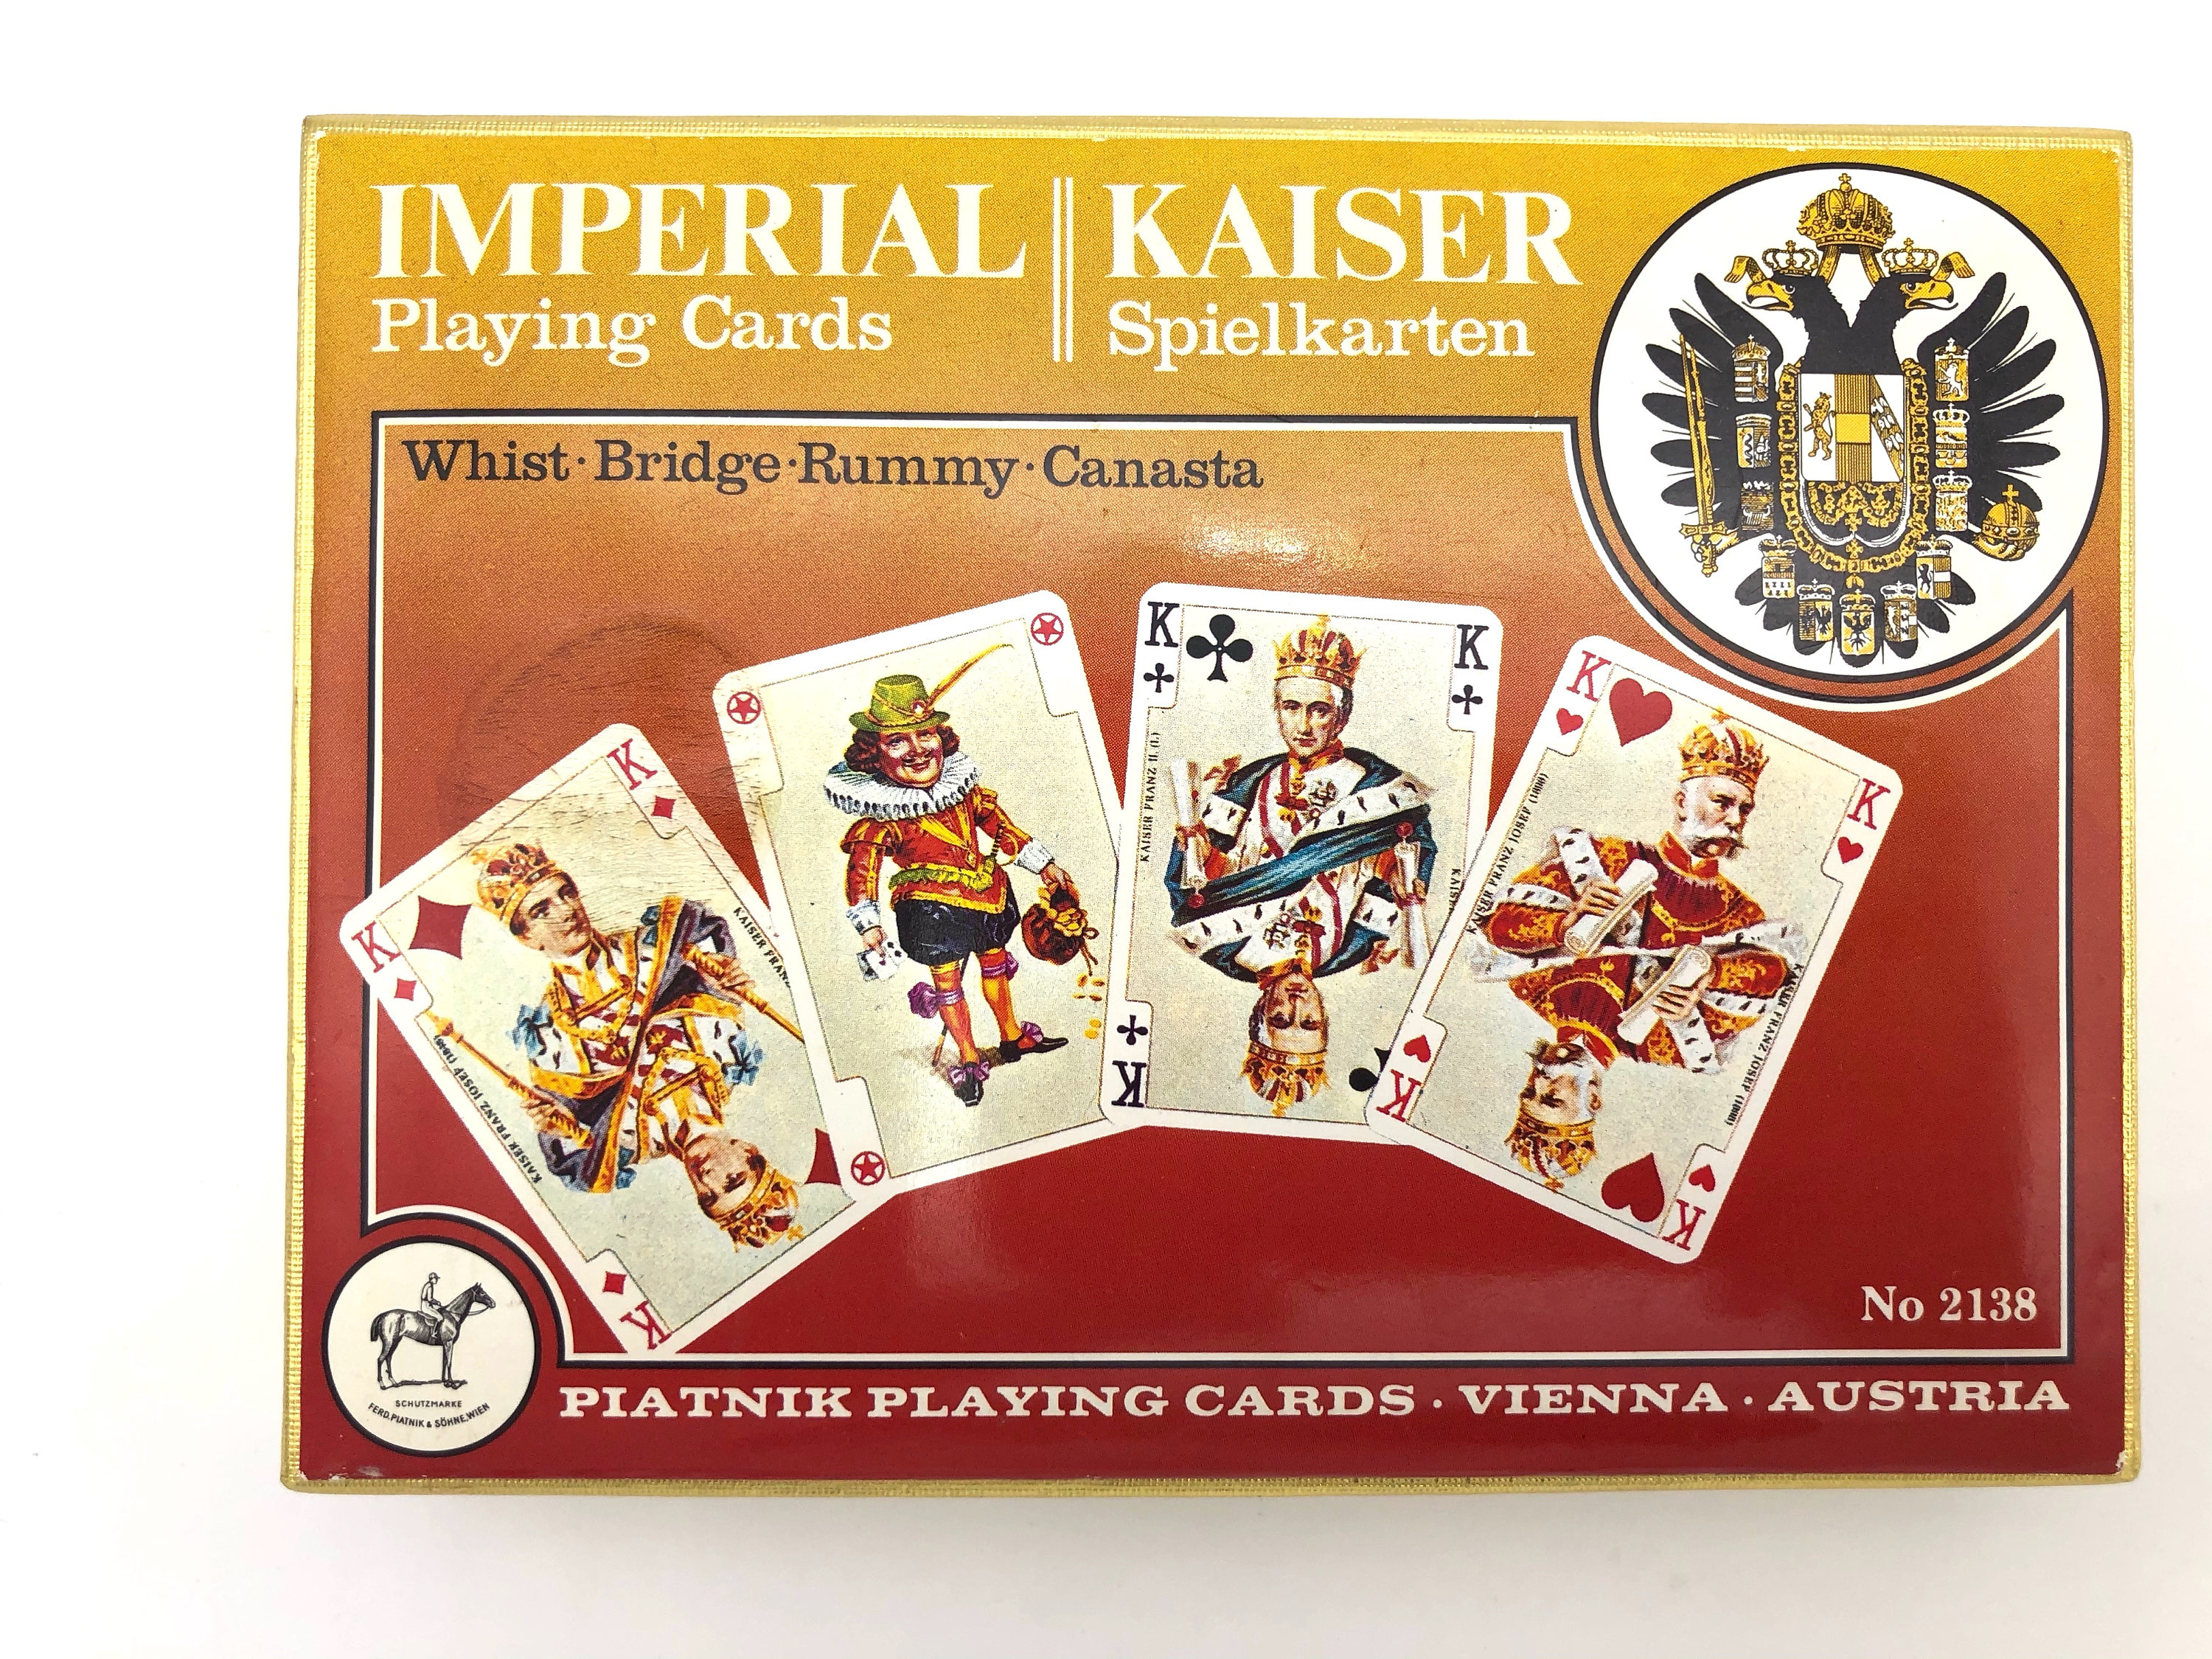 Vintage Imperial Kaiser Piatnik playing card set published in 1980. 